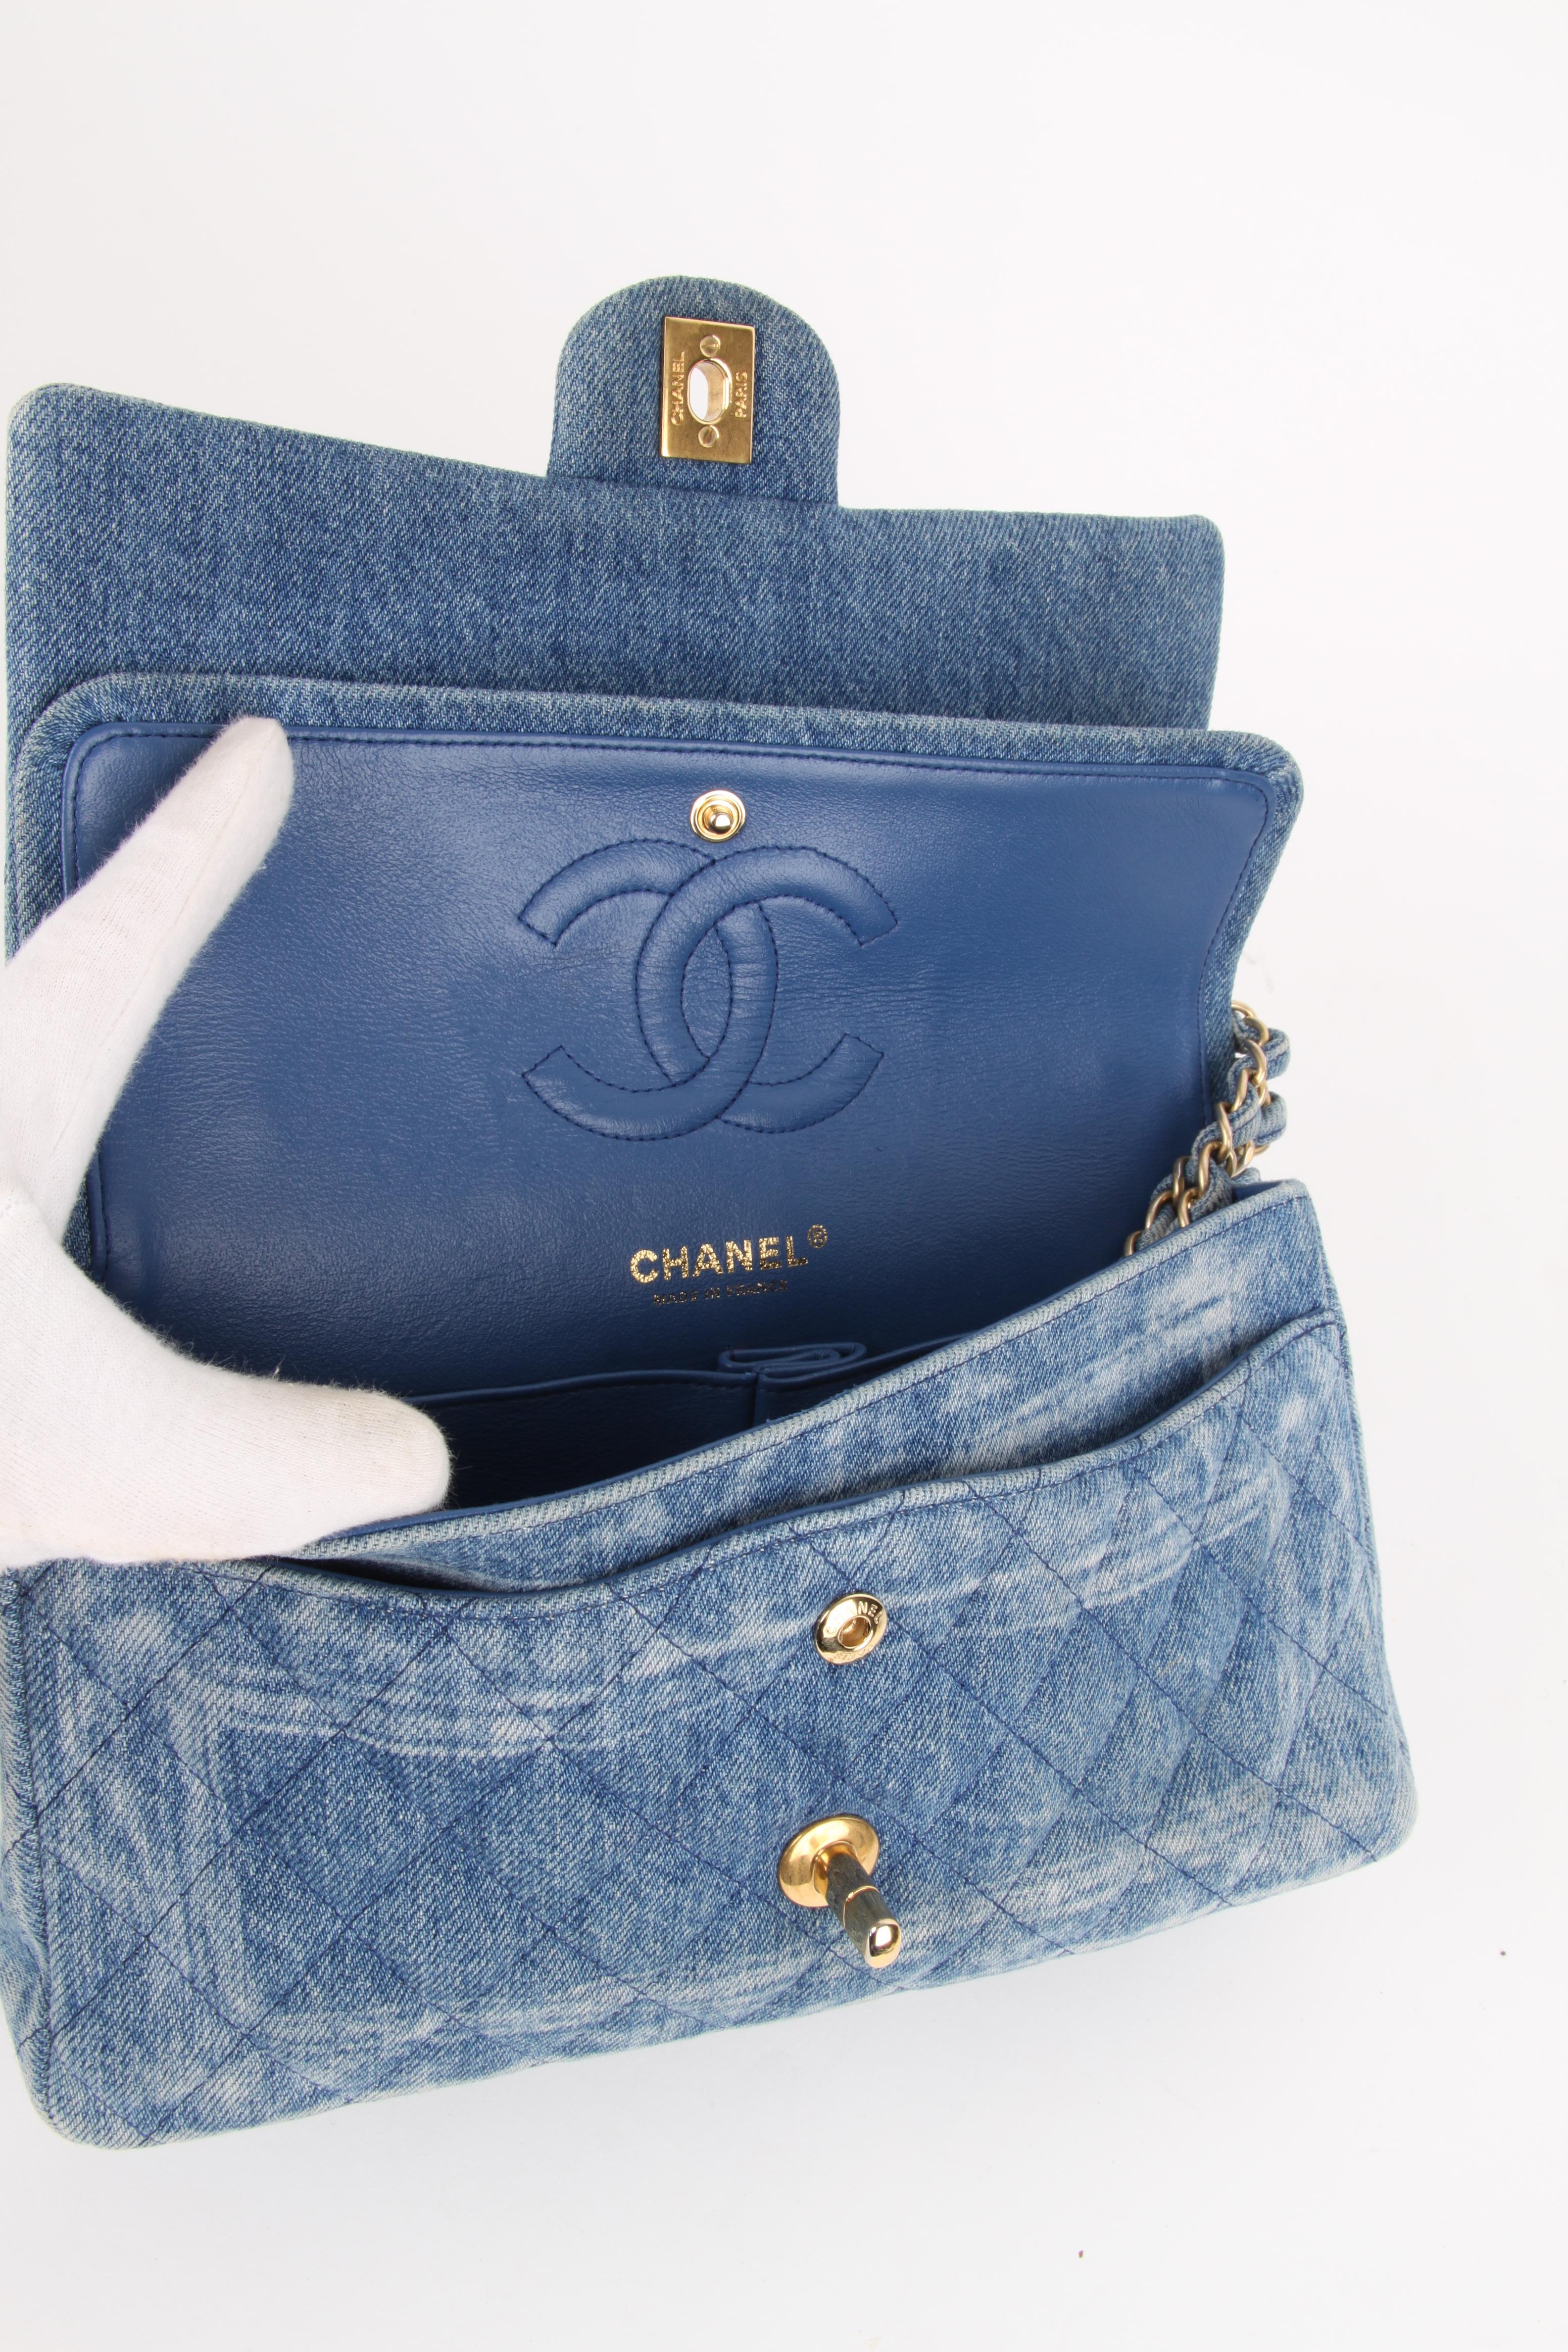 Chanel Classic Medium Denim Double Flap Bag  1